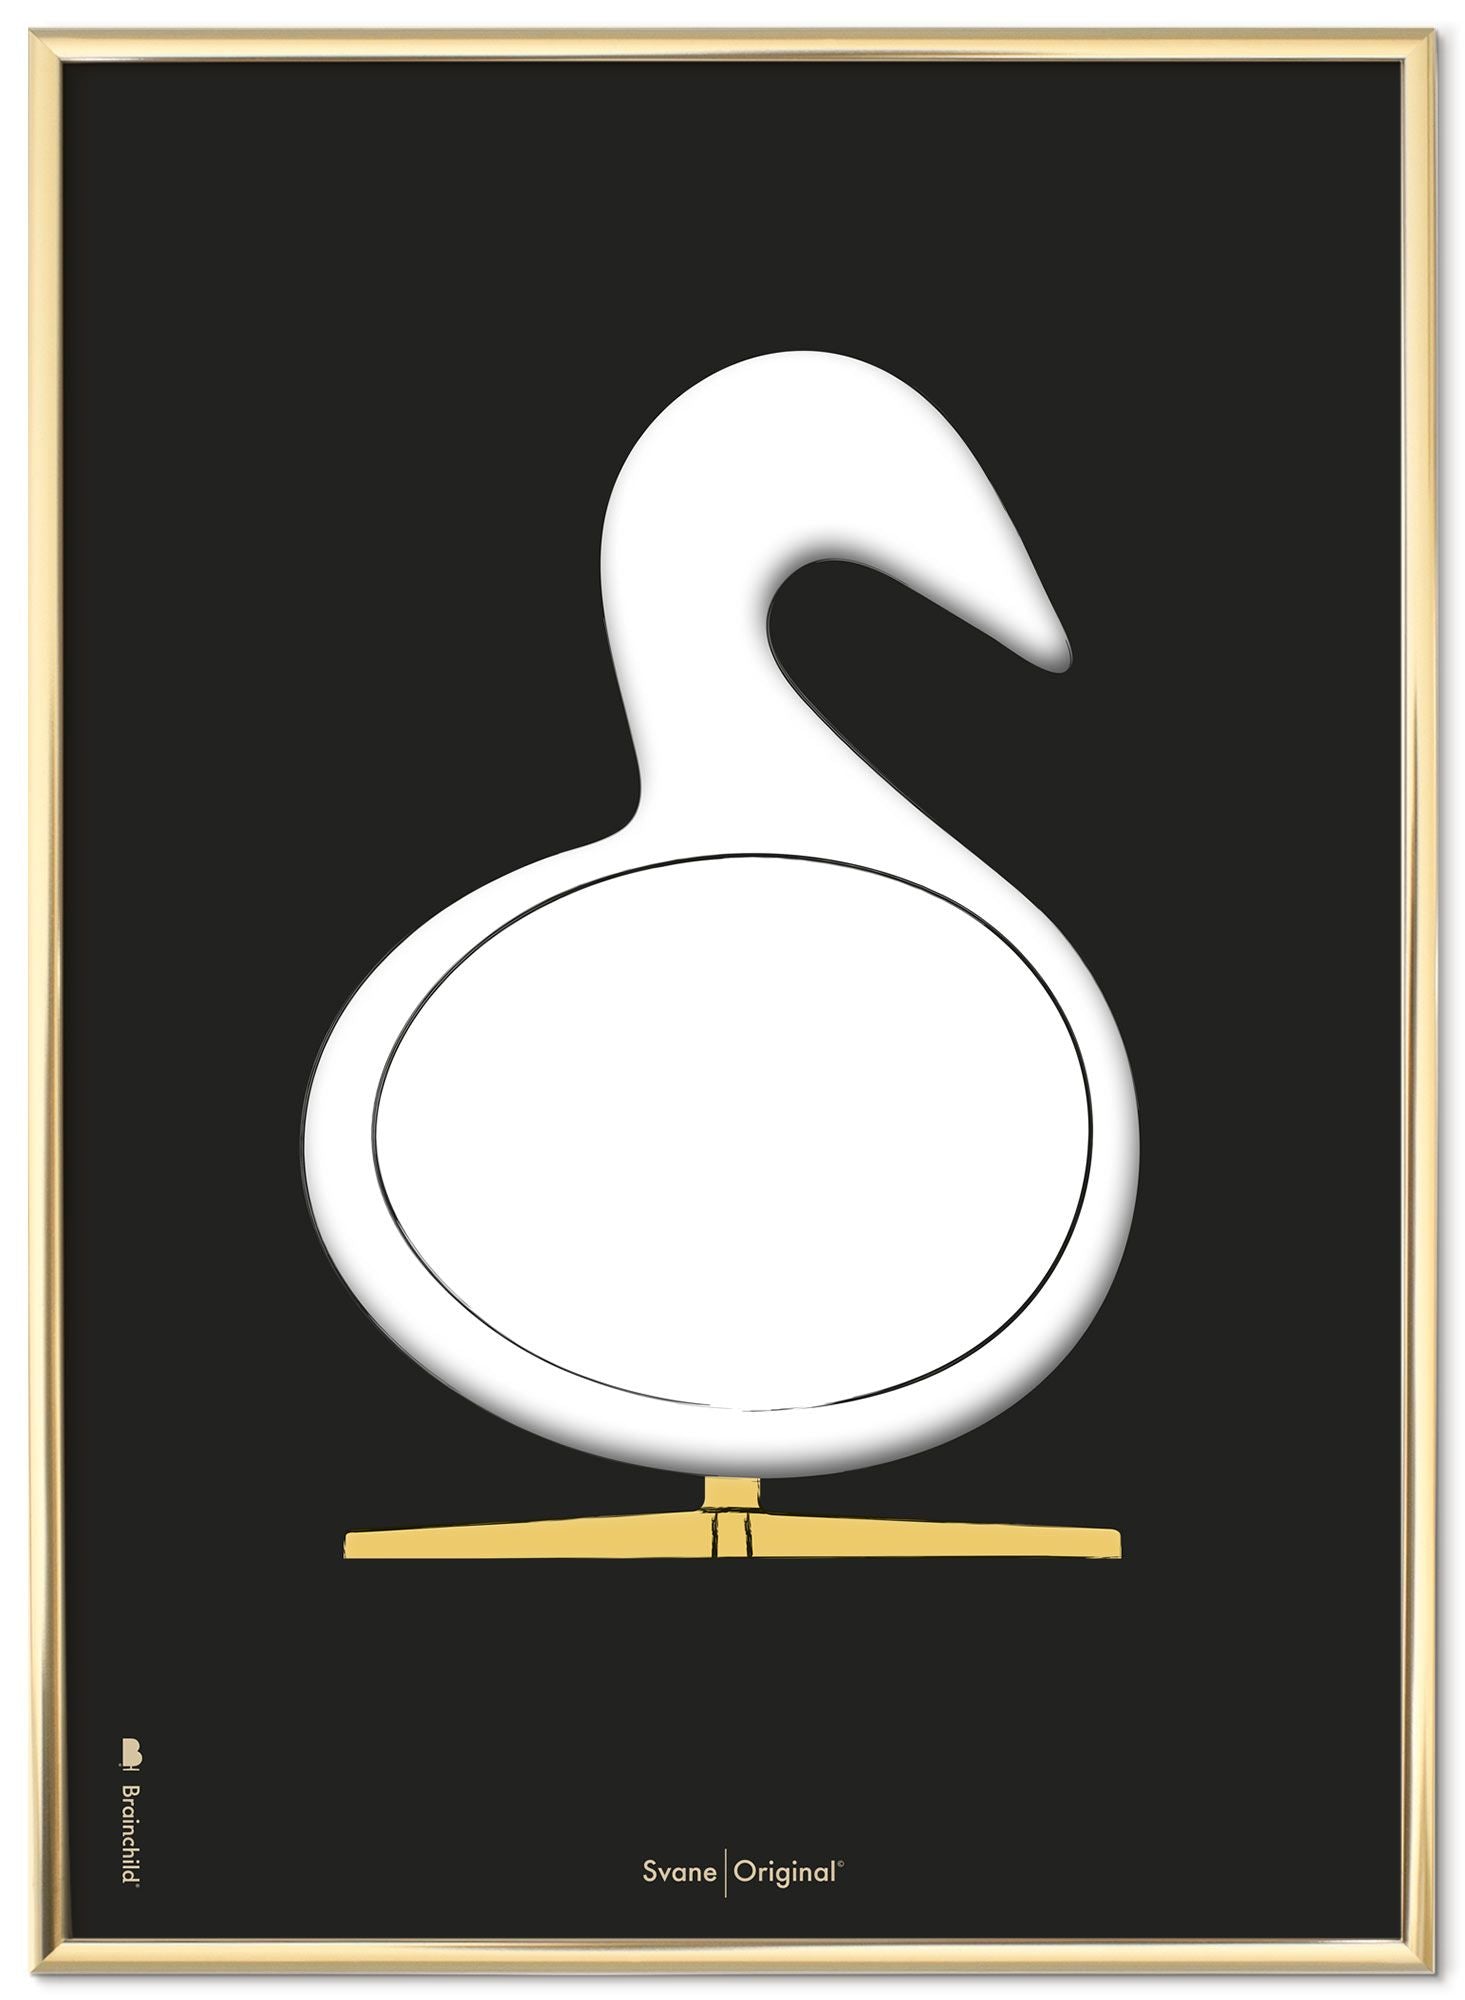 Brainchild Swan Design Sketch Poster Frame Made Of Brass Colored Metal 70x100 Cm, Black Background